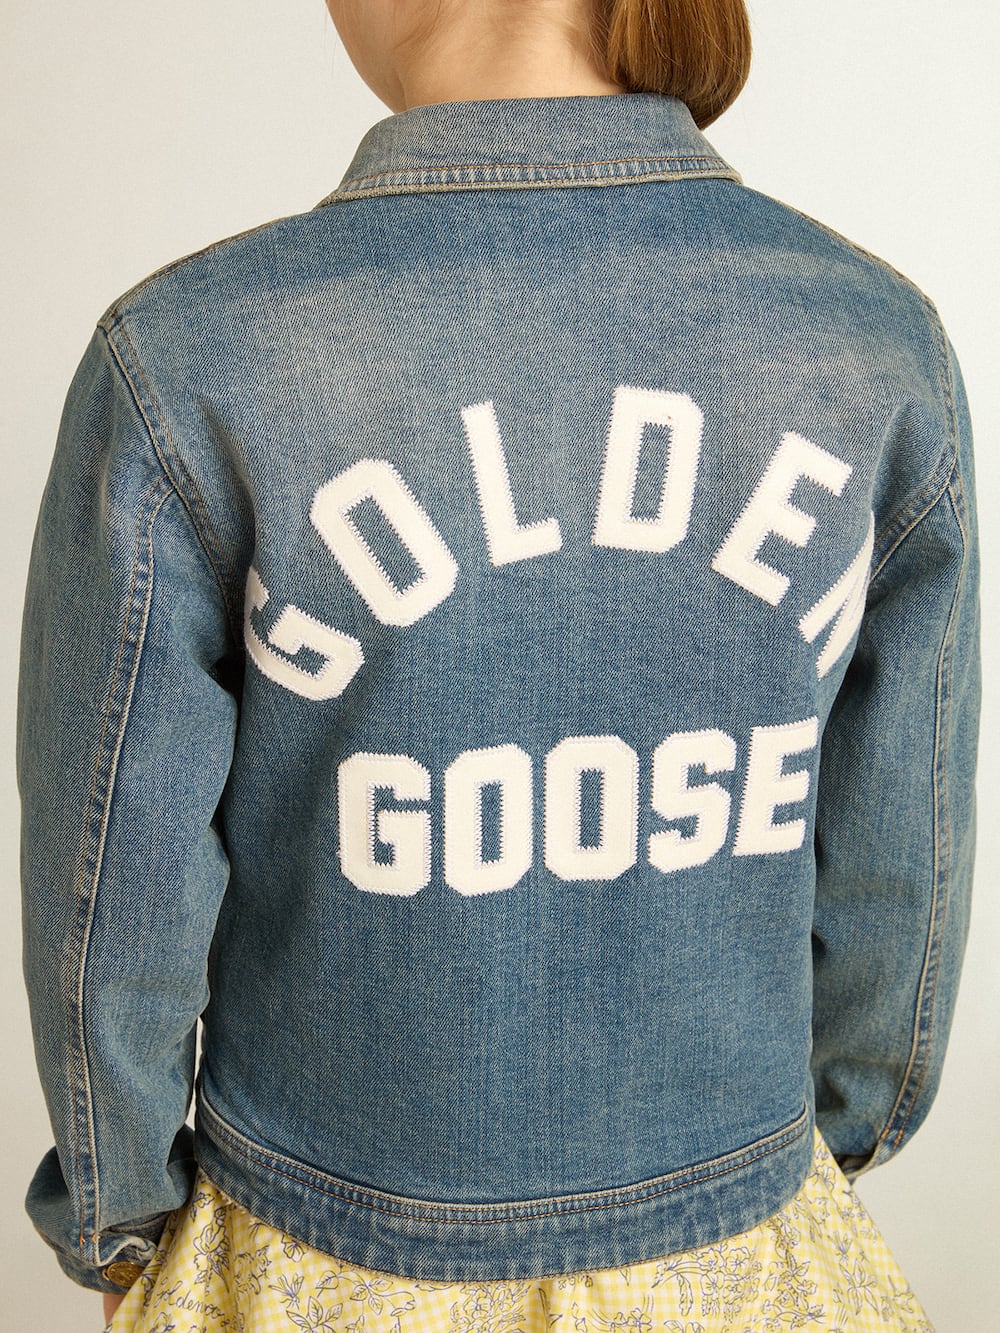 Golden Goose - Boys’ mid-wash denim jacket in 